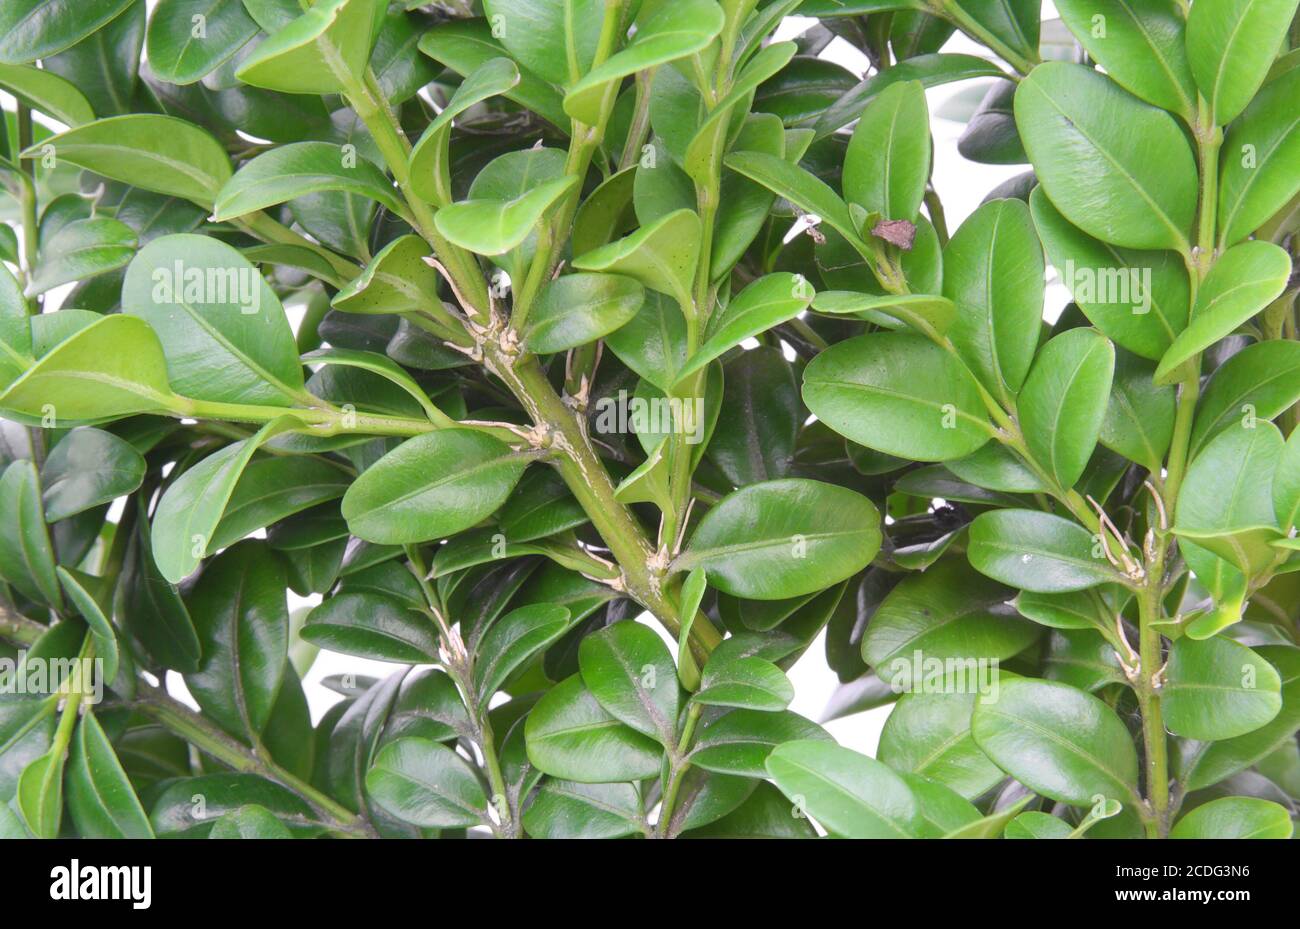 Immergrüne Boxwood Pflanze Hintergrund Stockfoto